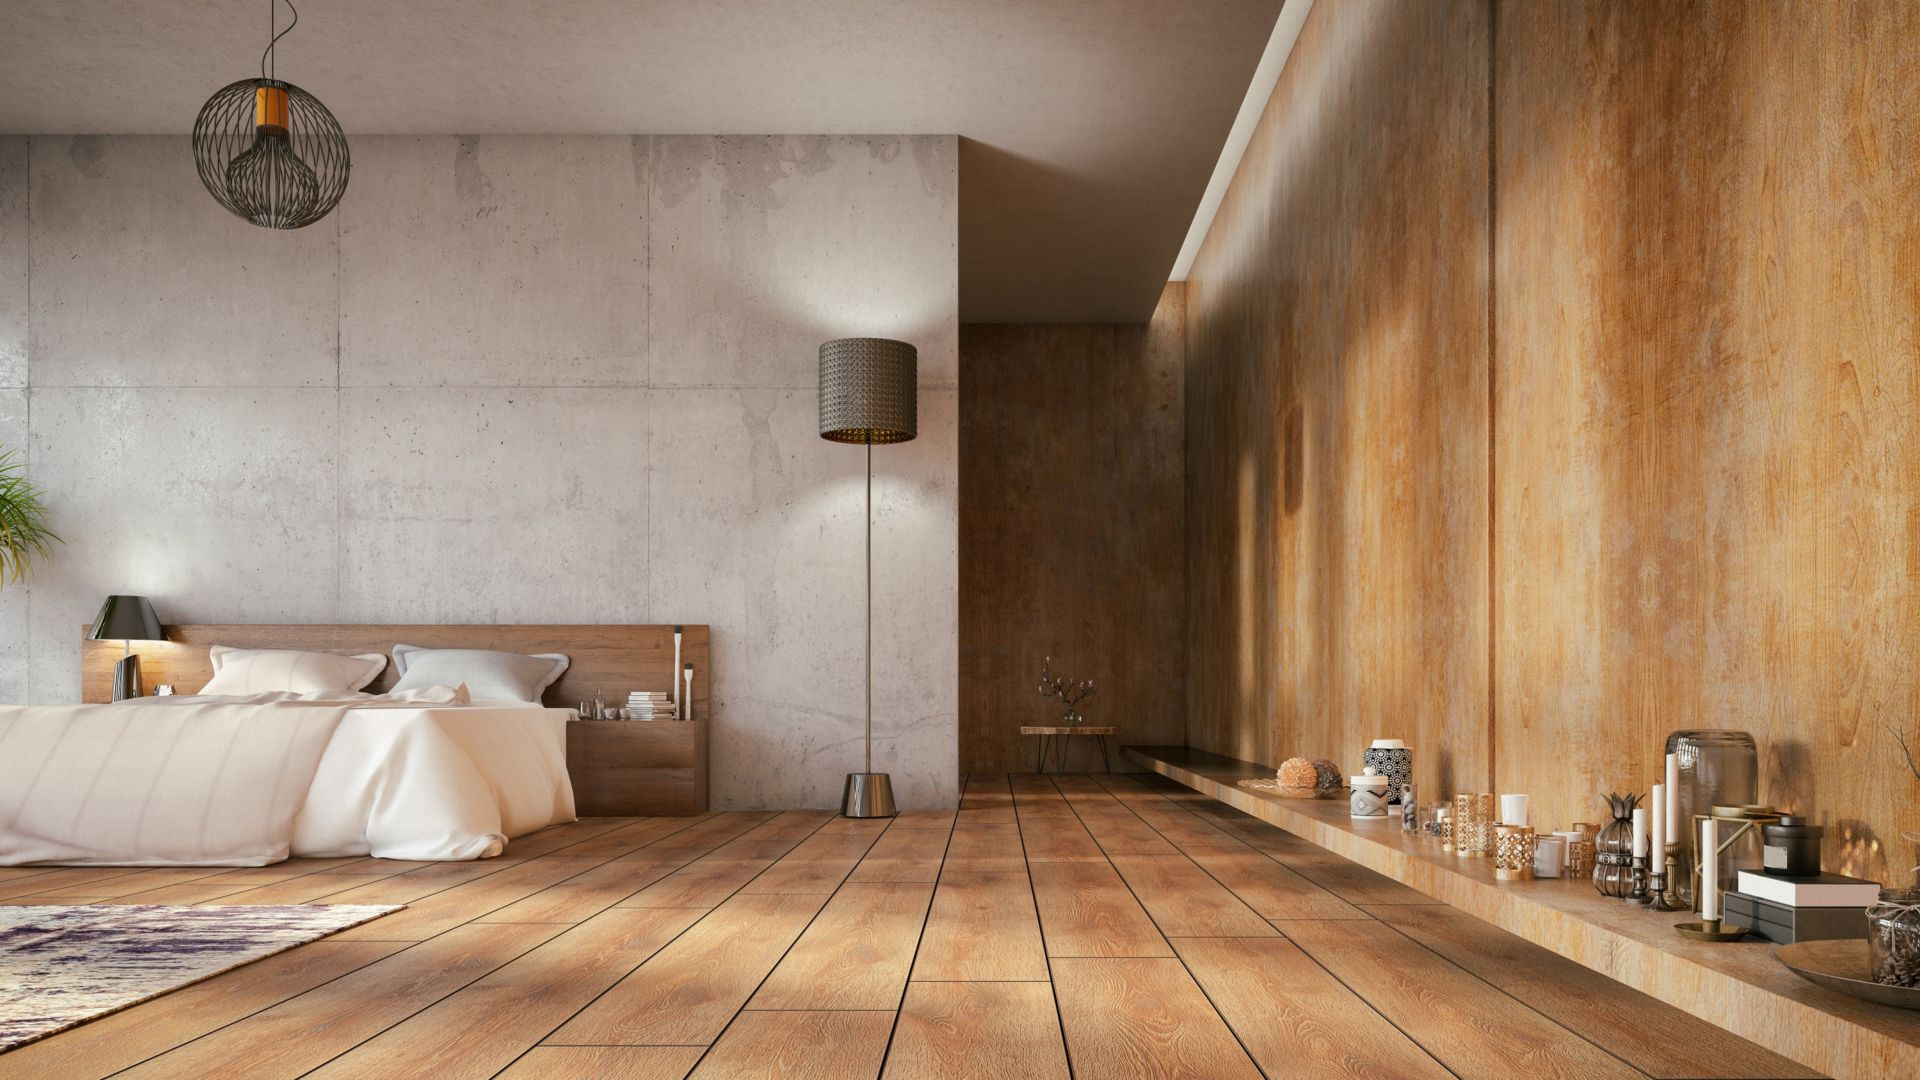 Loft room with cozy design.